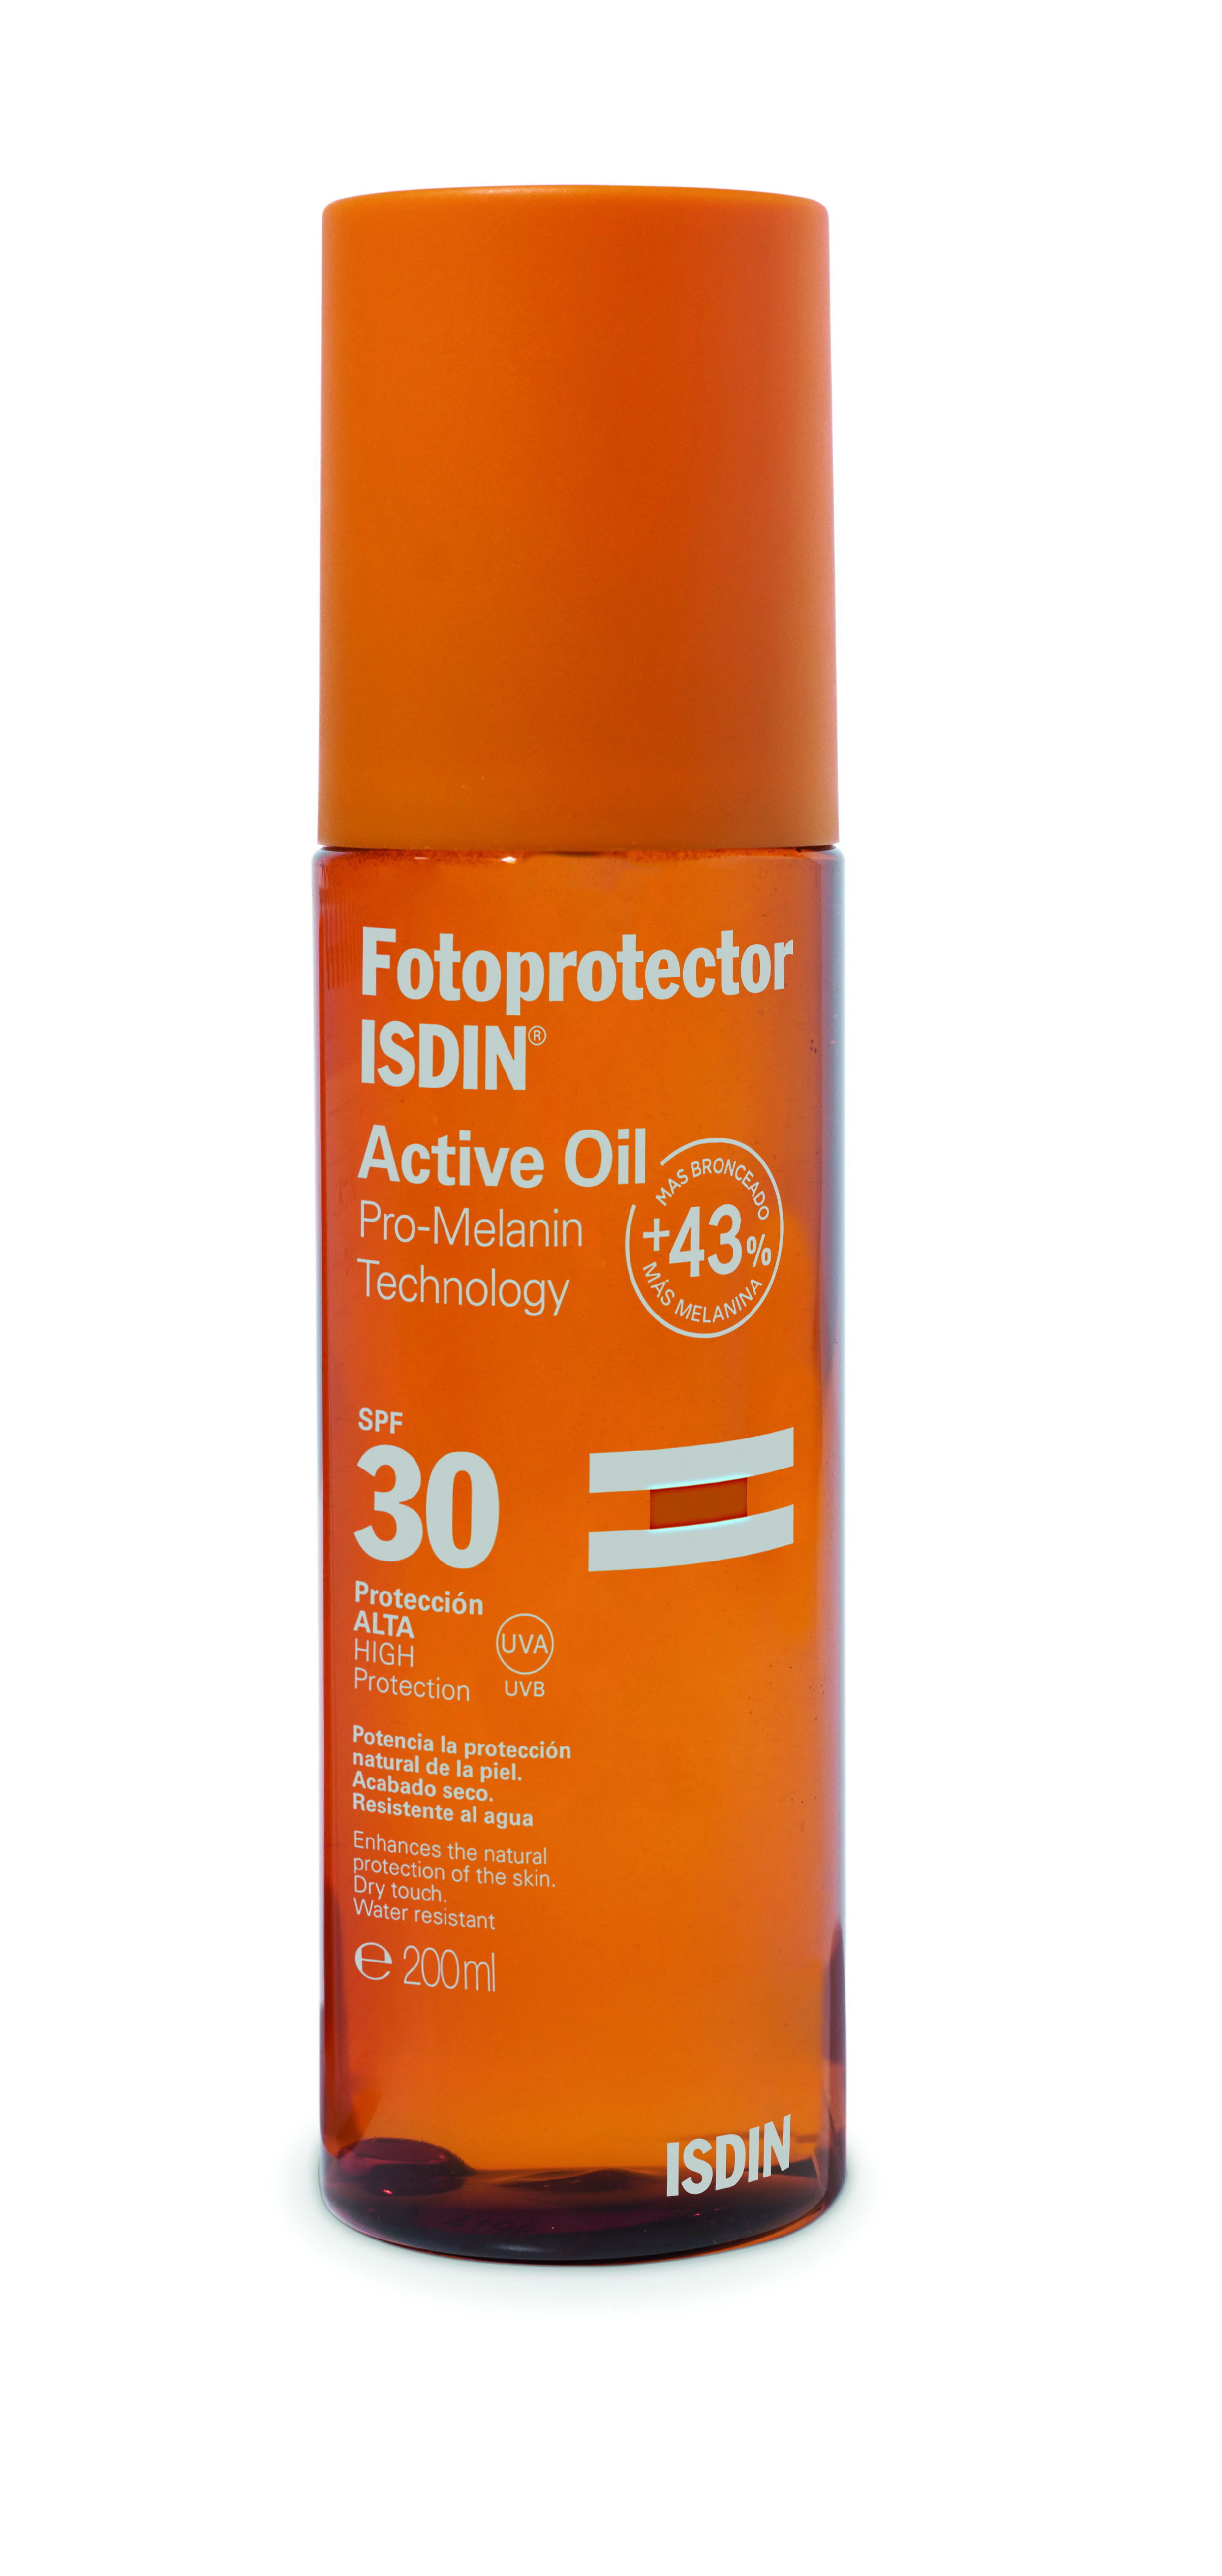 Pele sensível — Fotoprotector Active Oil ISDIN (27€)